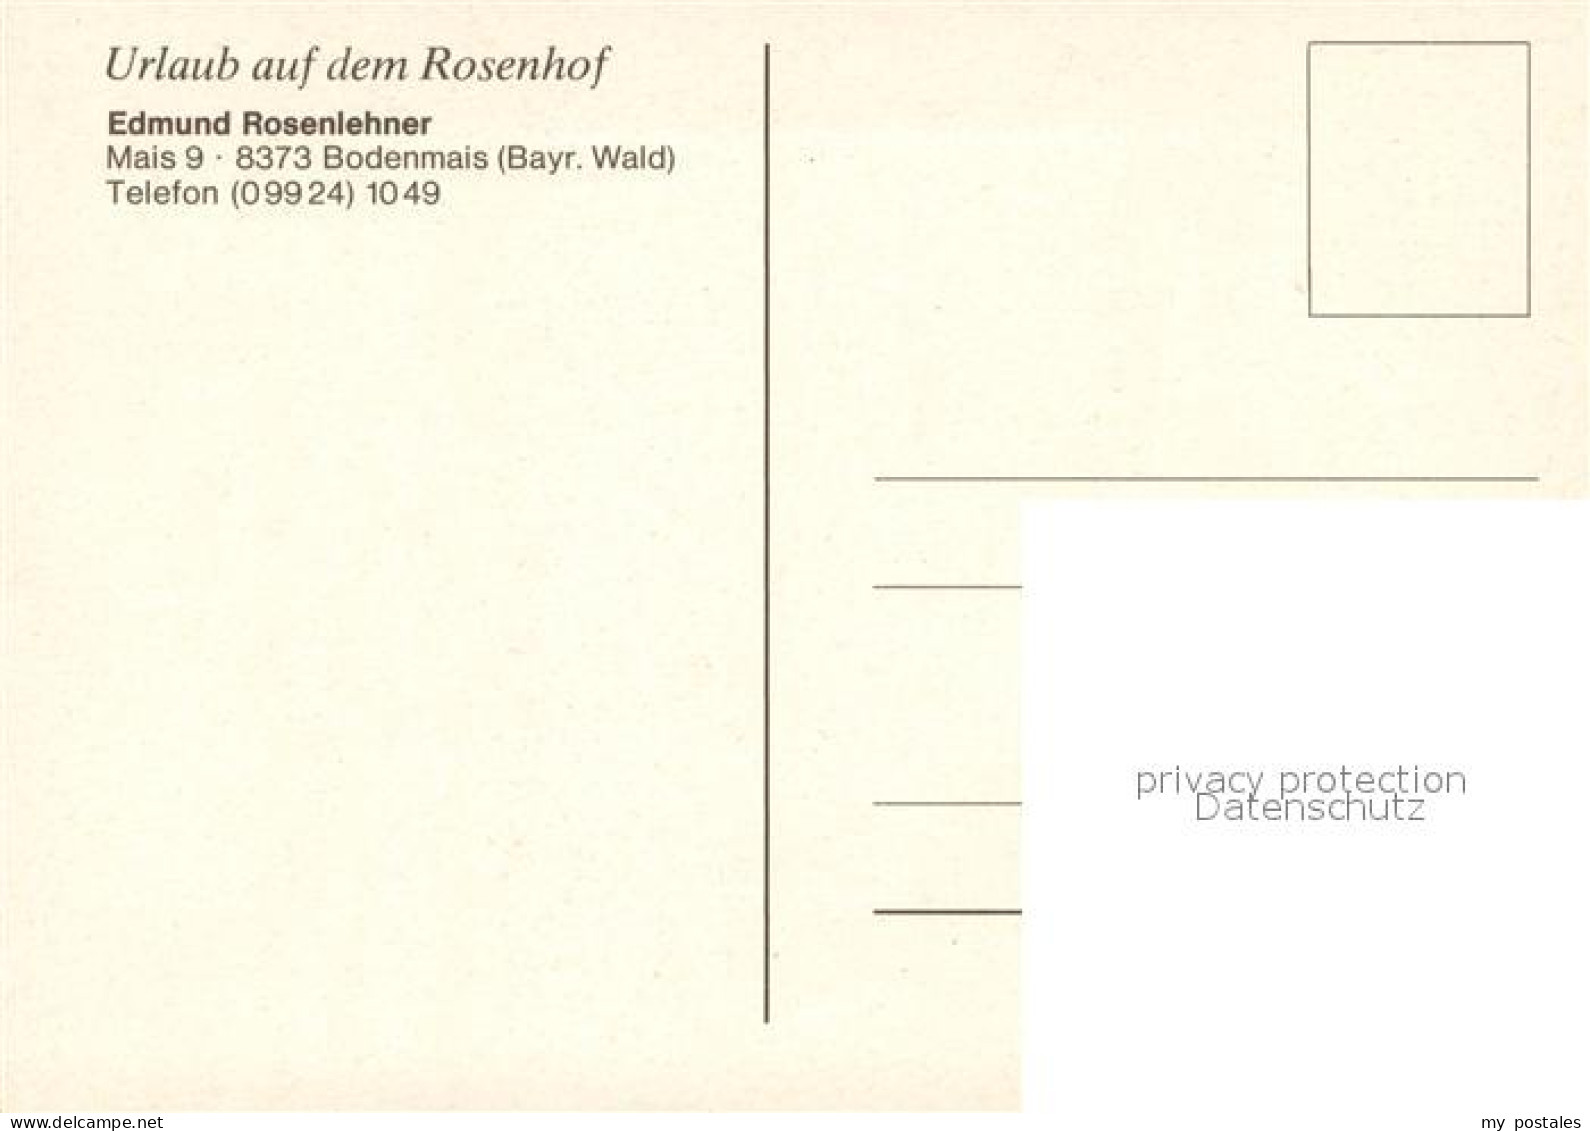 73653236 Bodenmais Urlaub Auf Dem Rosenhof Blumenschmuck Bodenmais - Bodenmais